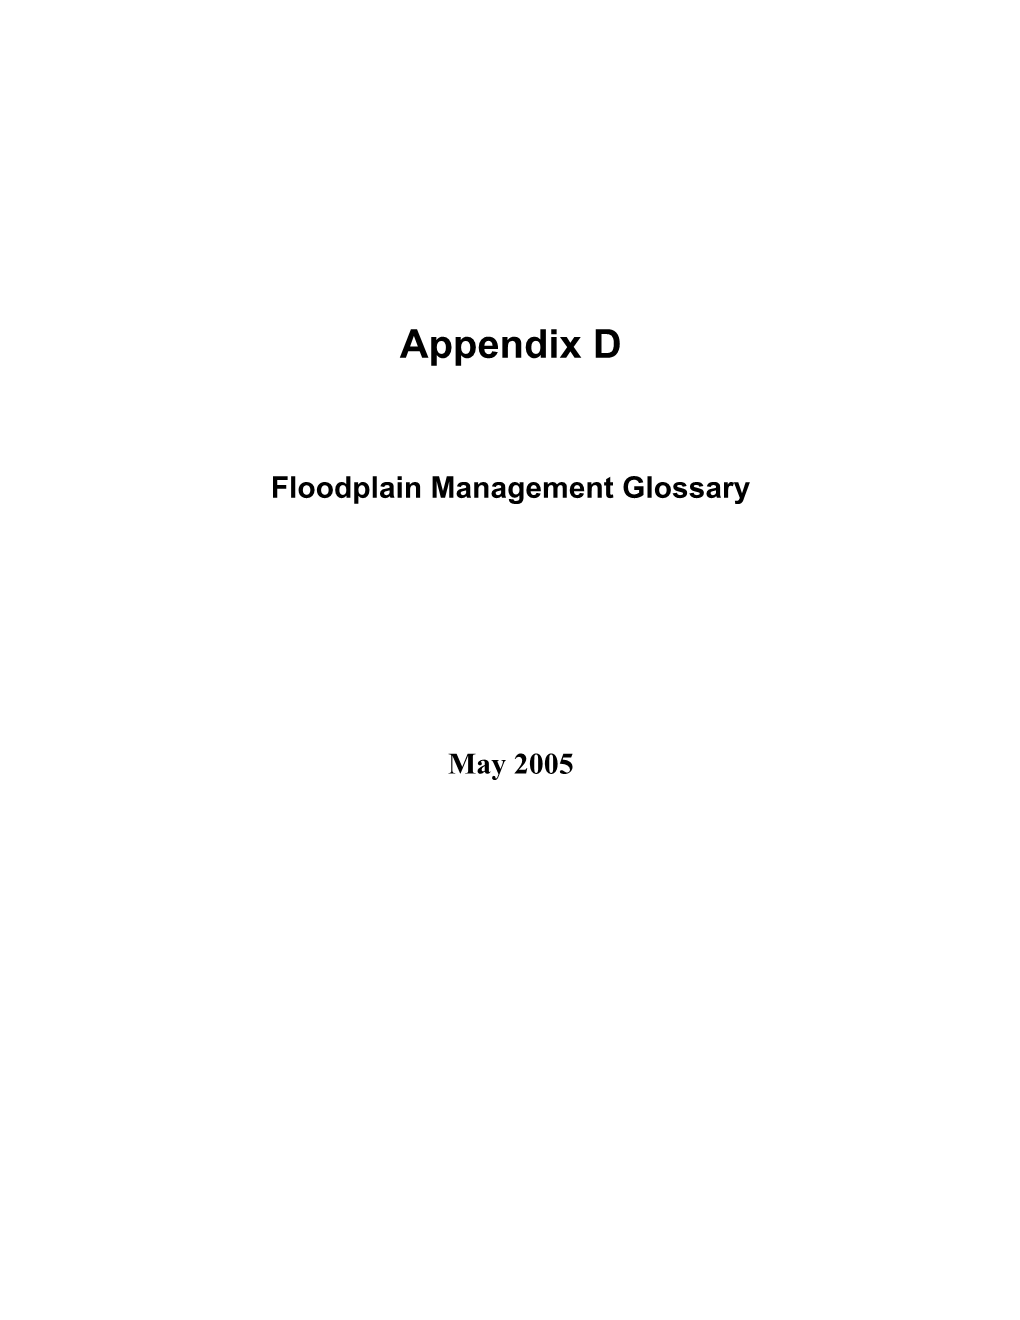 Floodplain Management Glossary